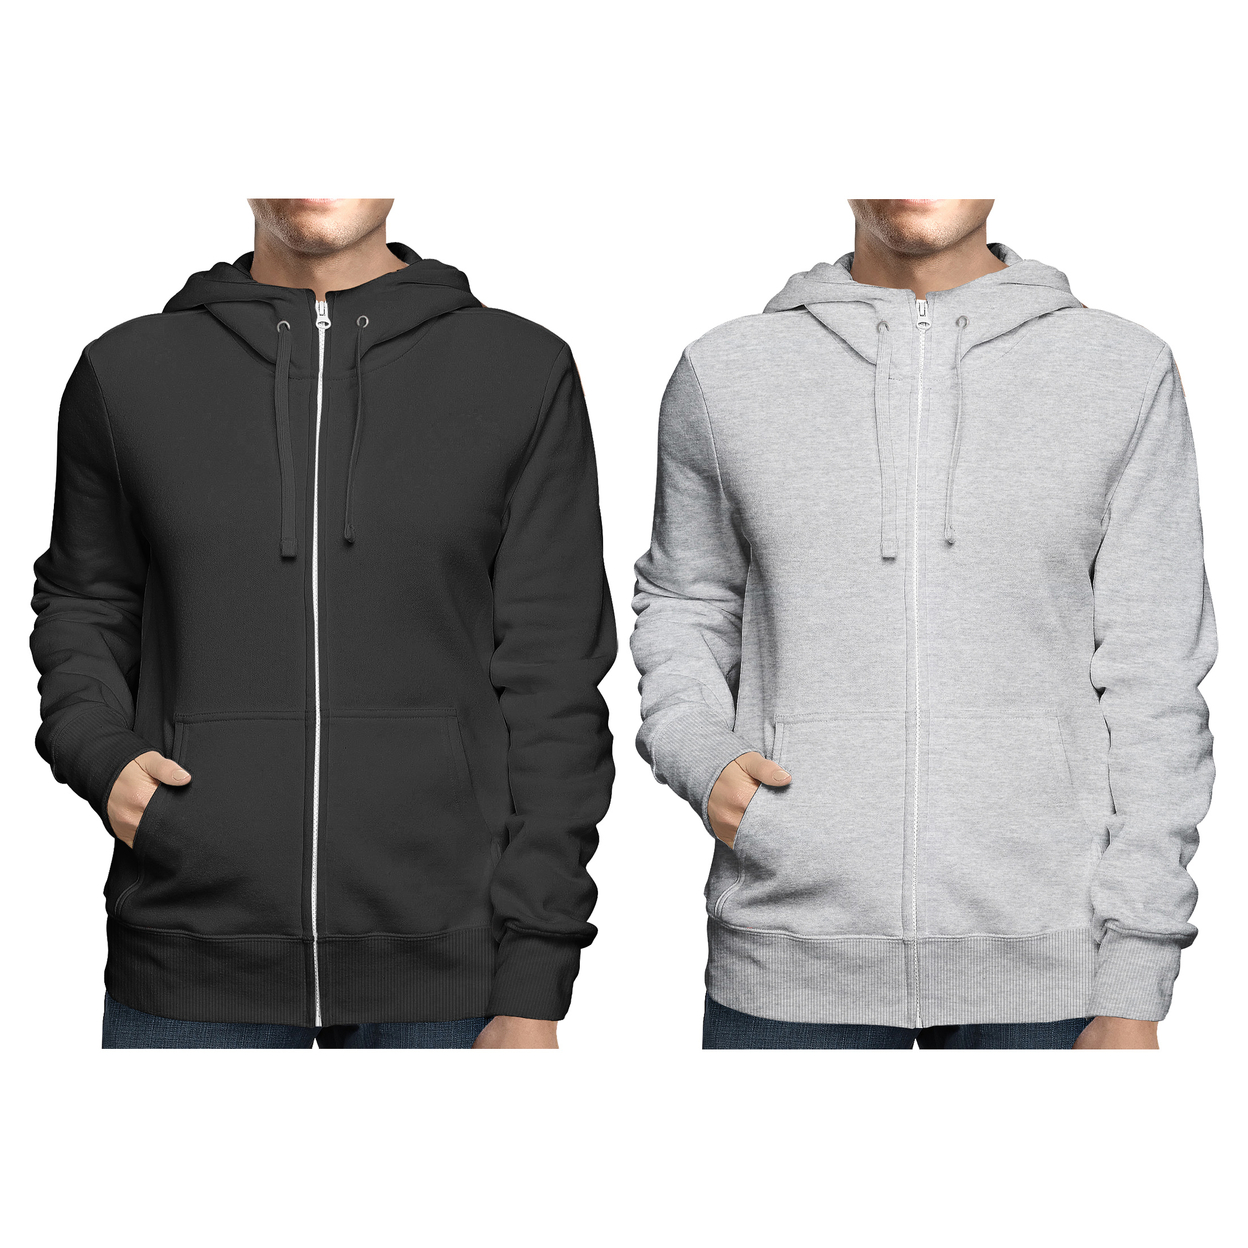 2-Pack: Men's Winter Warm Soft Full Zip-Up Fleece Lined Hoodie Sweatshirt - Black & Charcoal, Large